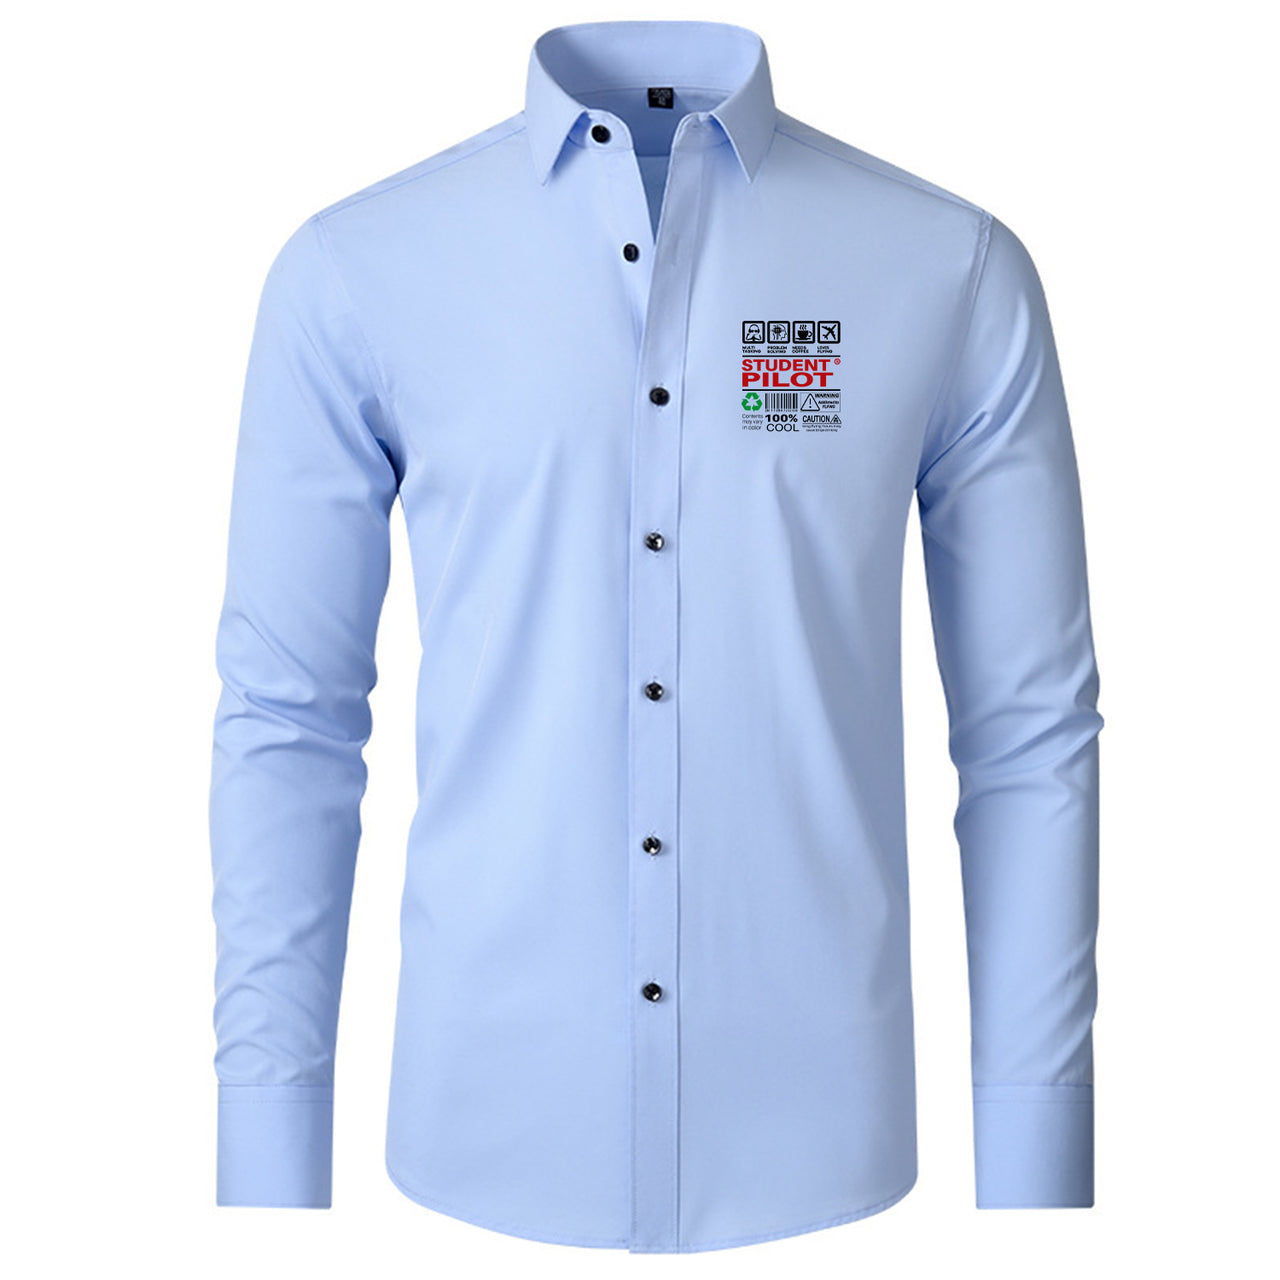 Student Pilot Label Designed Long Sleeve Shirts